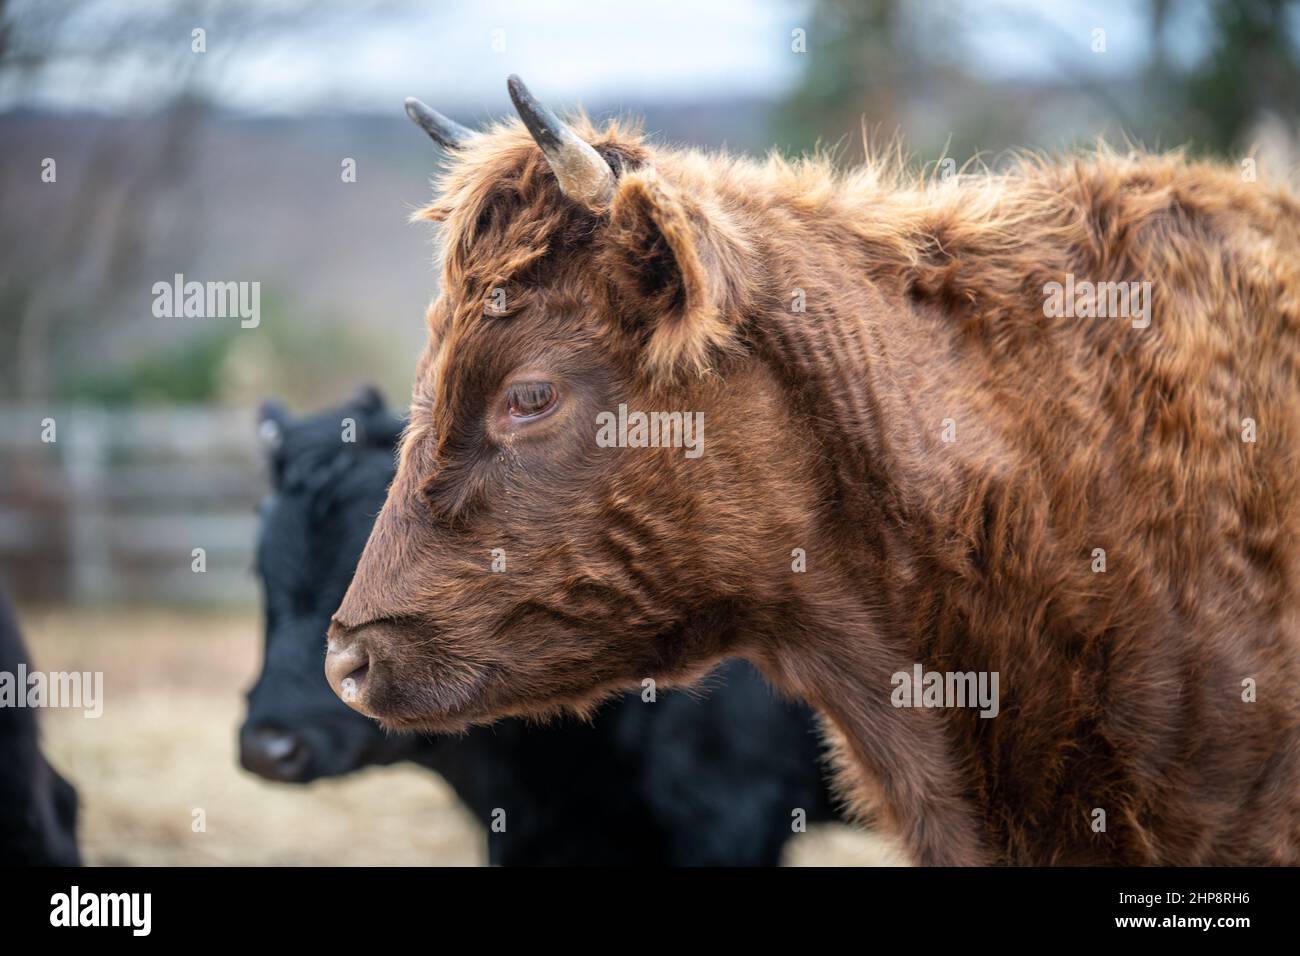 Dexter cattle Stock Photo